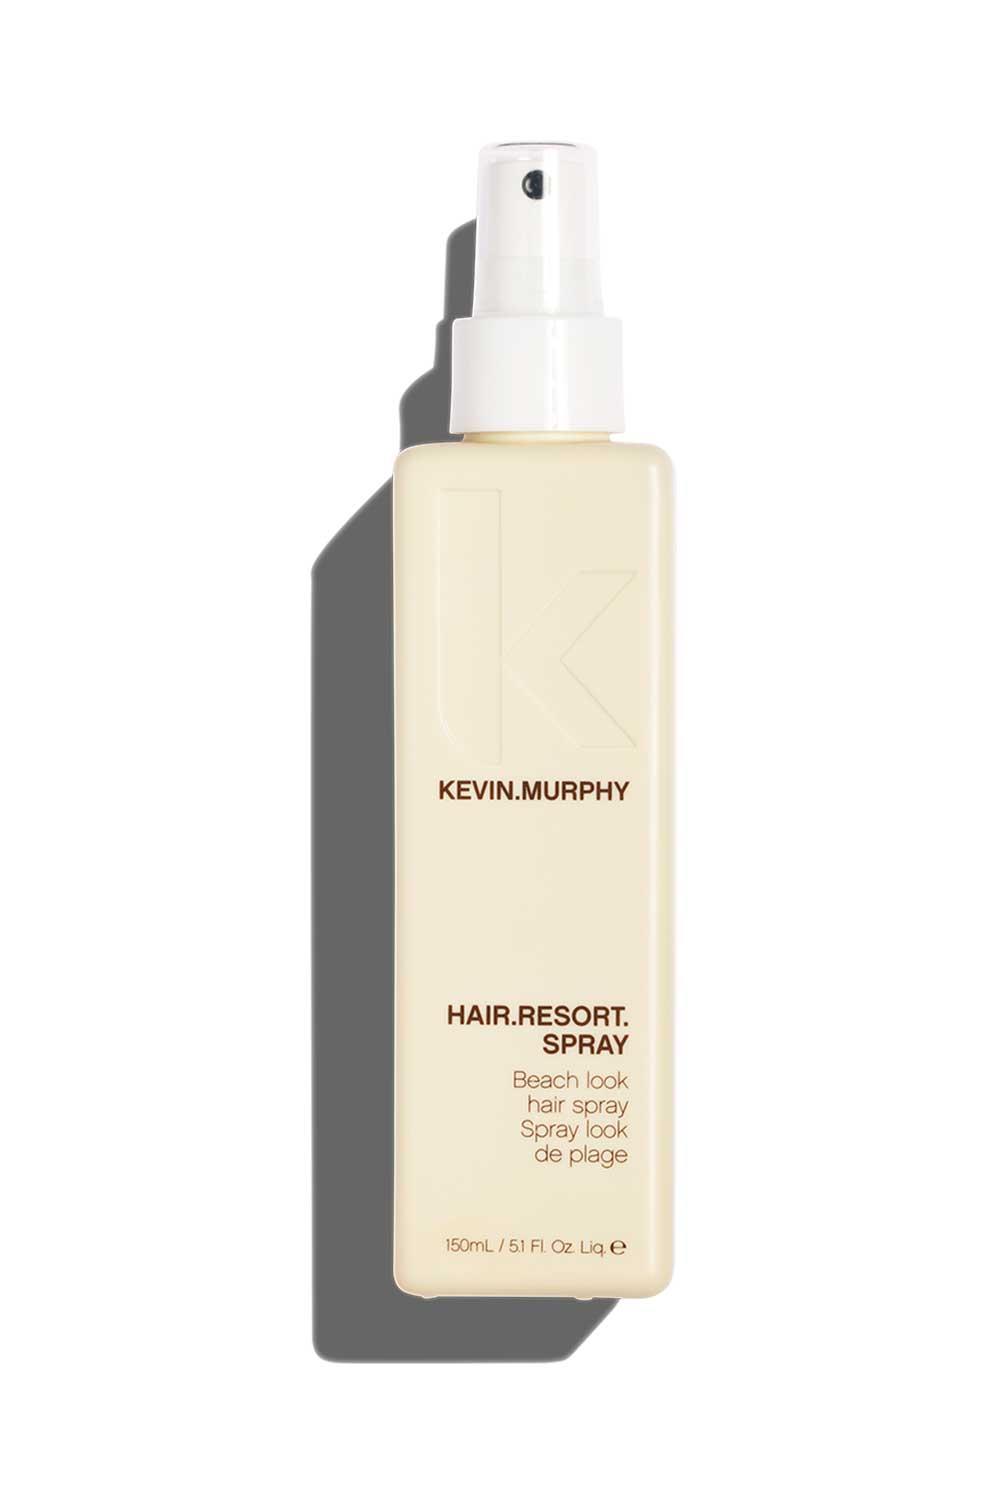 Kevin5. Hair Resort Spray, Kevin Murphy